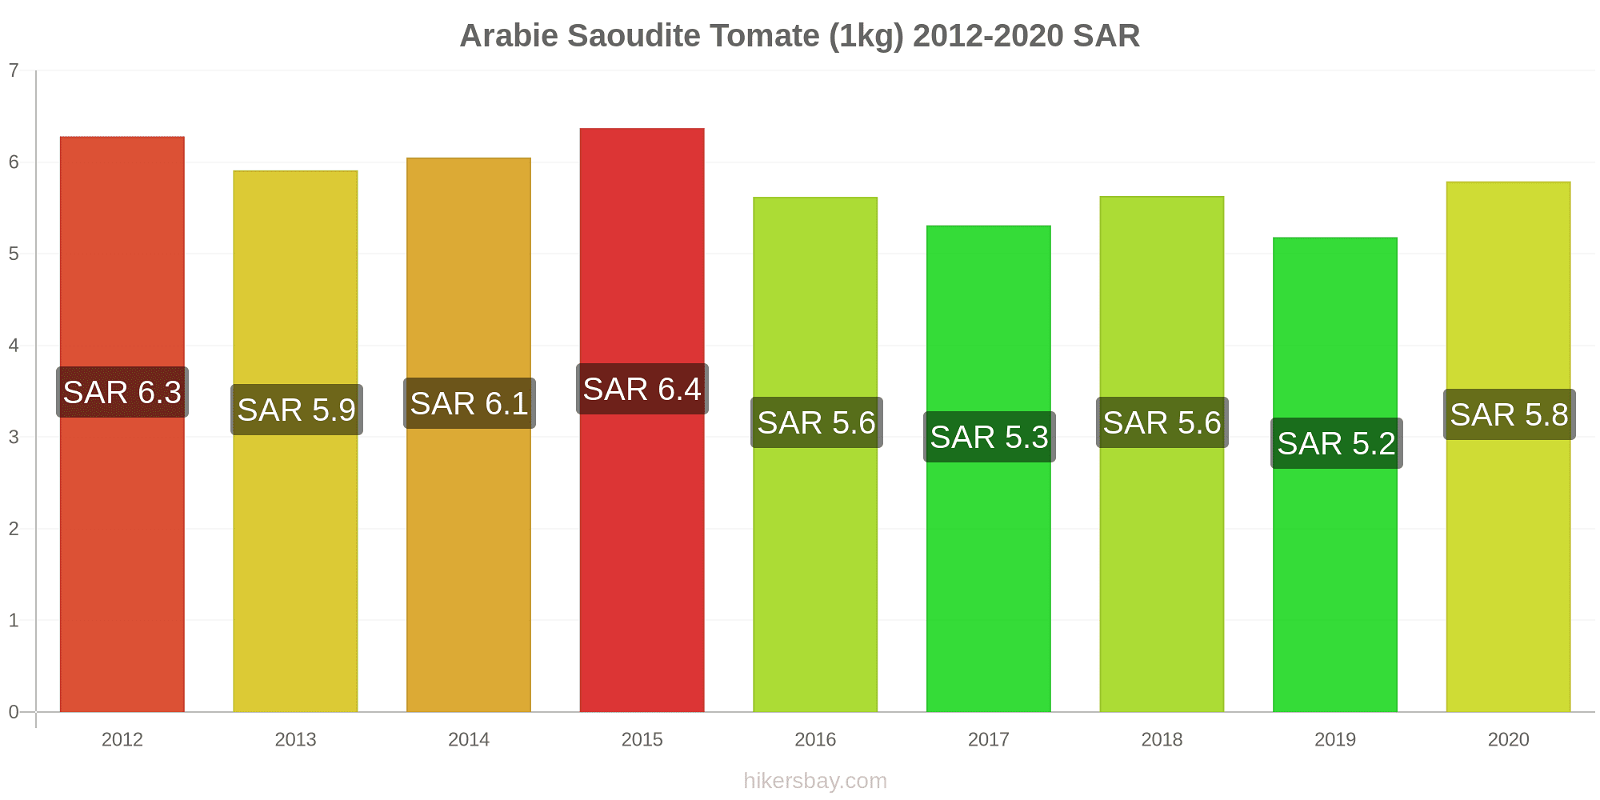 Arabie Saoudite changements de prix Tomate (1kg) hikersbay.com